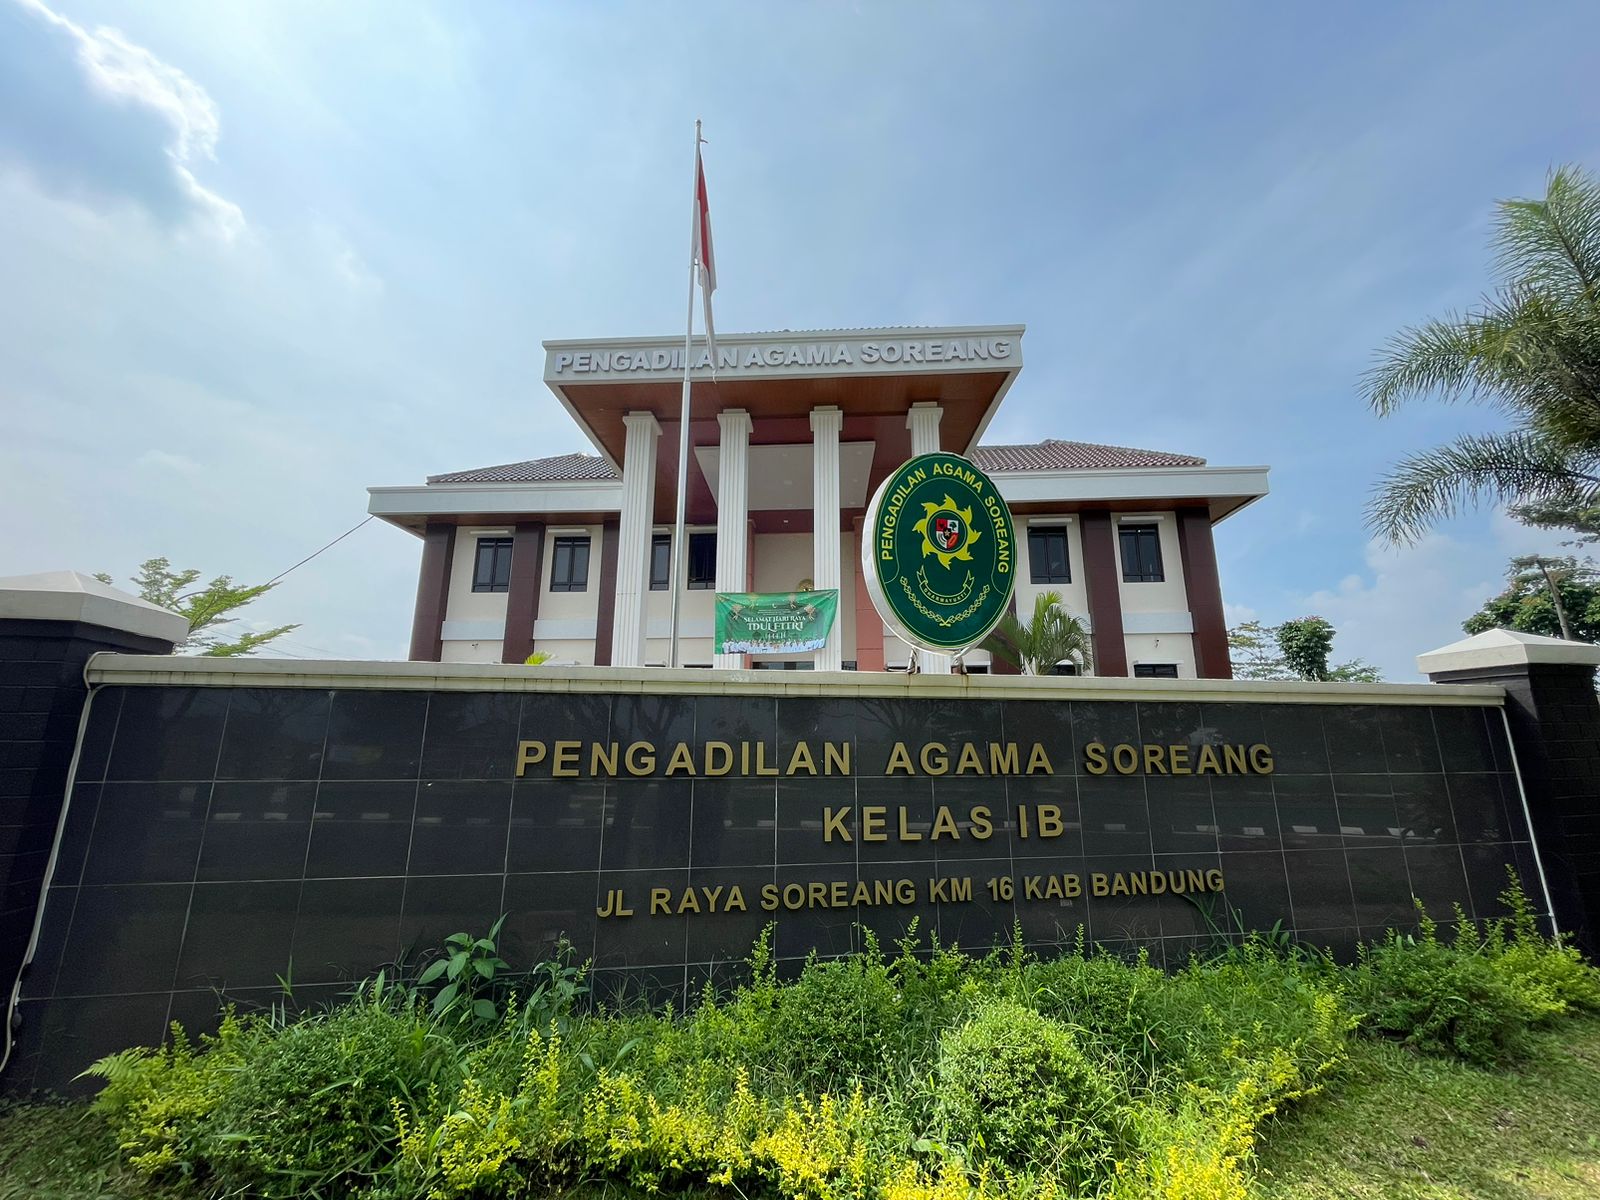 Marak Dispensasi Kawin di Kab. Bandung, Pengadilan Agama: Belum Siap Mental